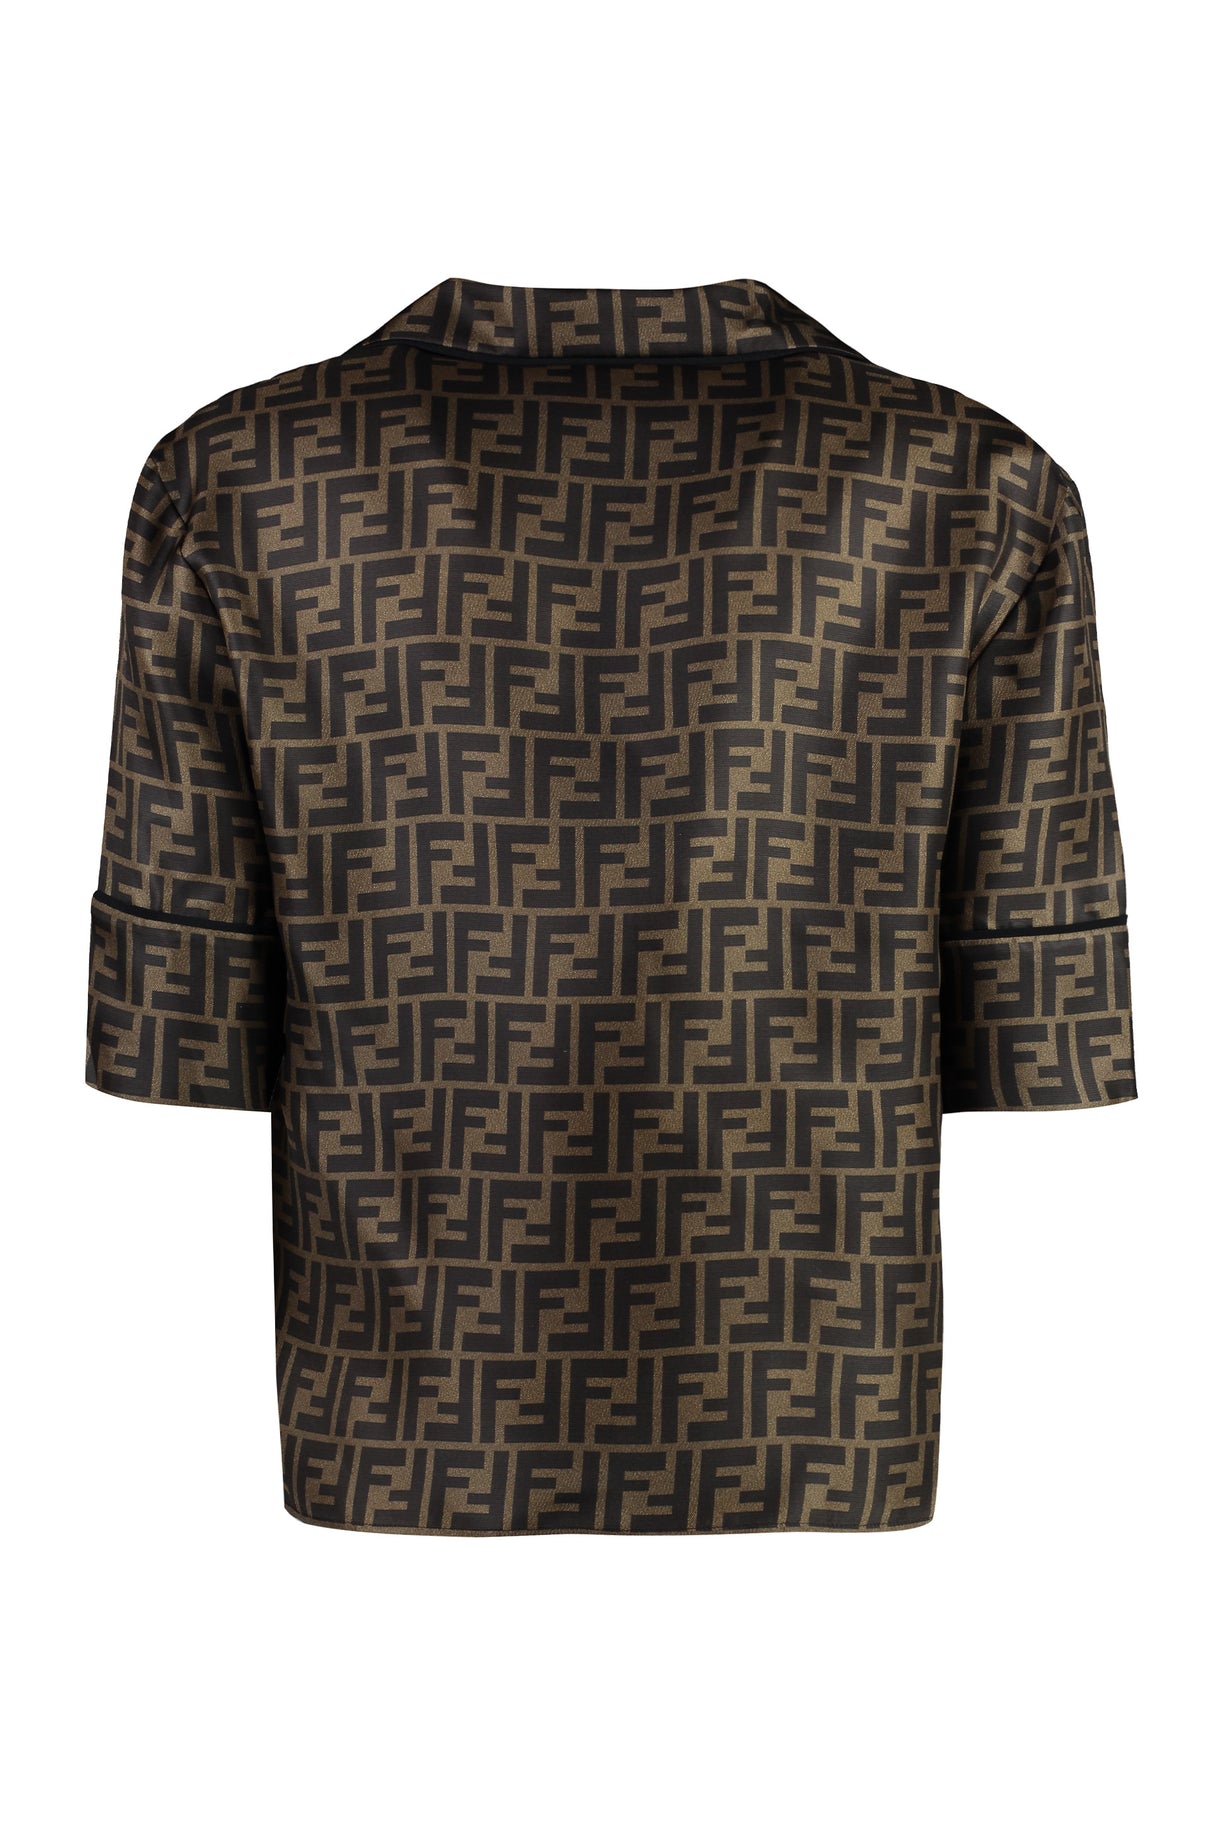 FENDI Brown Silk Two-Piece Women's Pyjama - FF Pattern, Short Sleeve Shirt and Elasticated Shorts